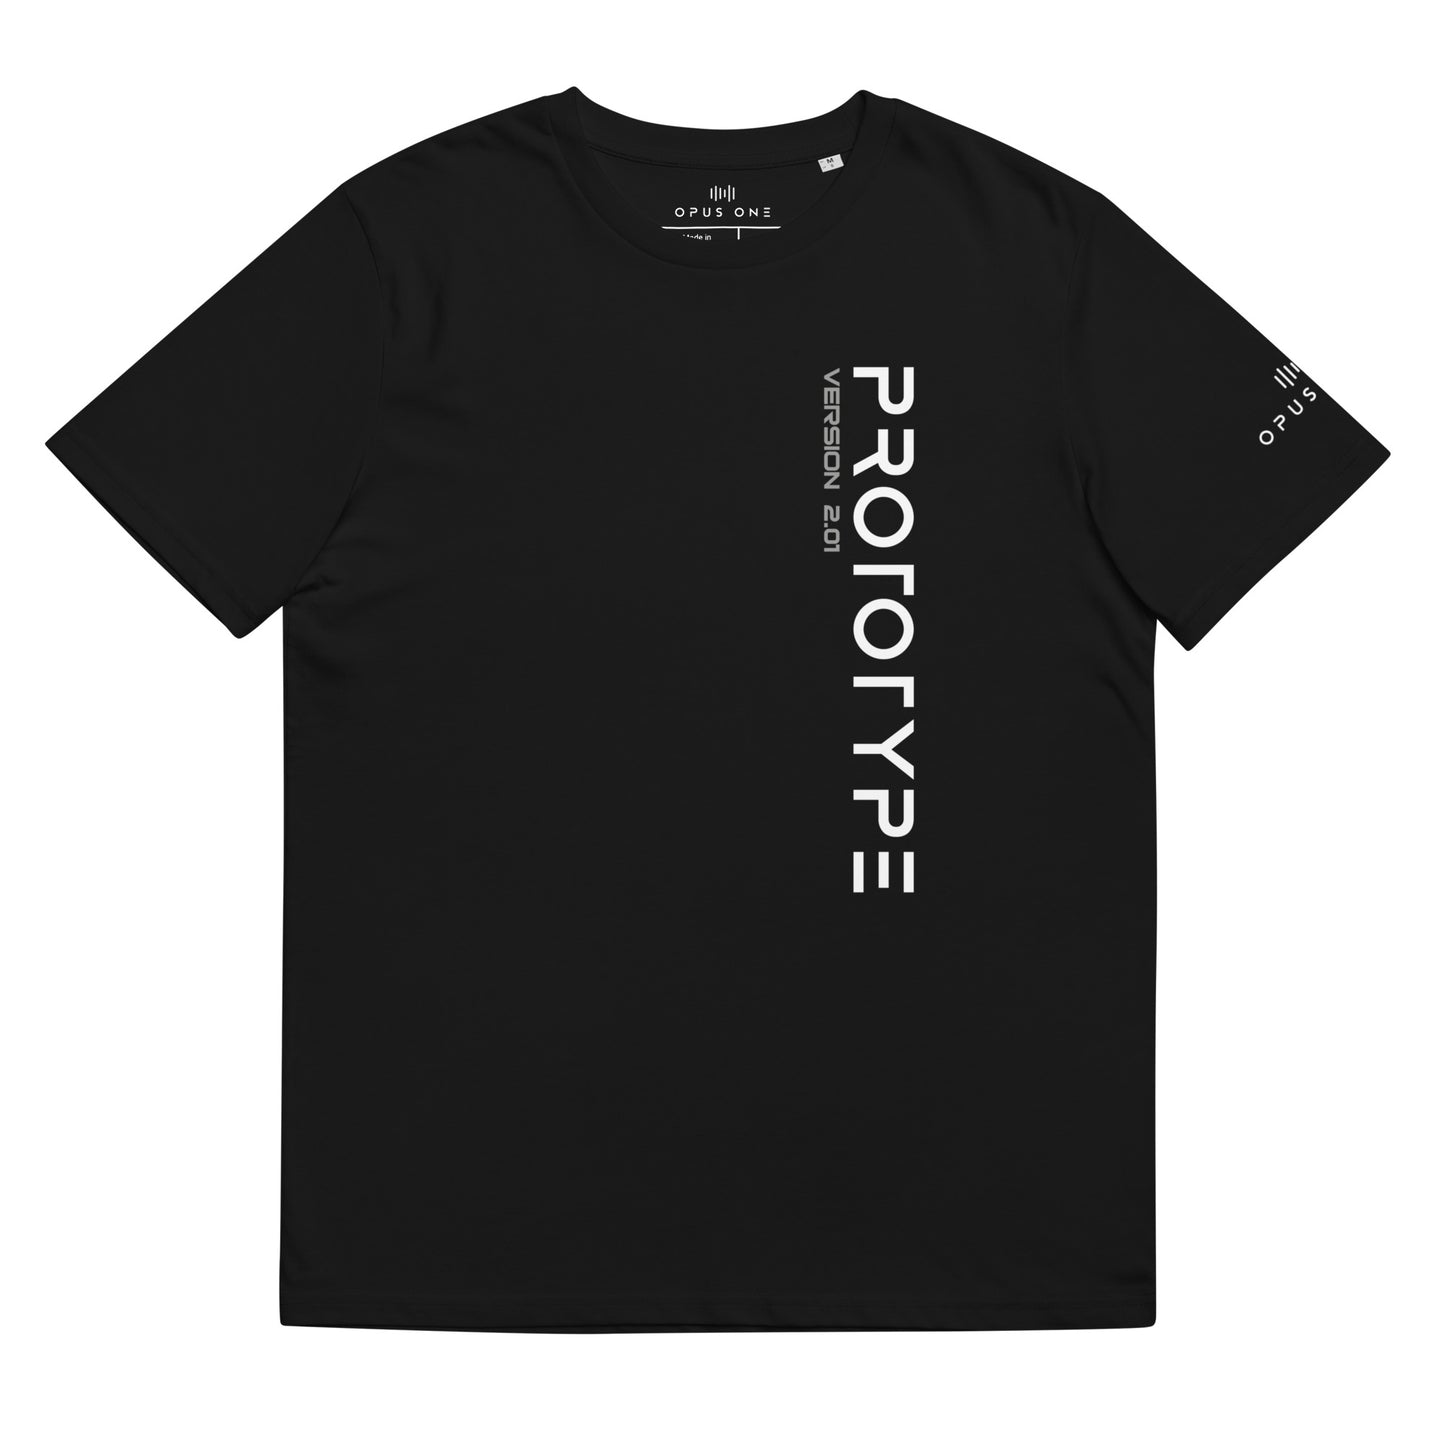 Prototype (v4) Unisex organic cotton t-shirt (White Text)